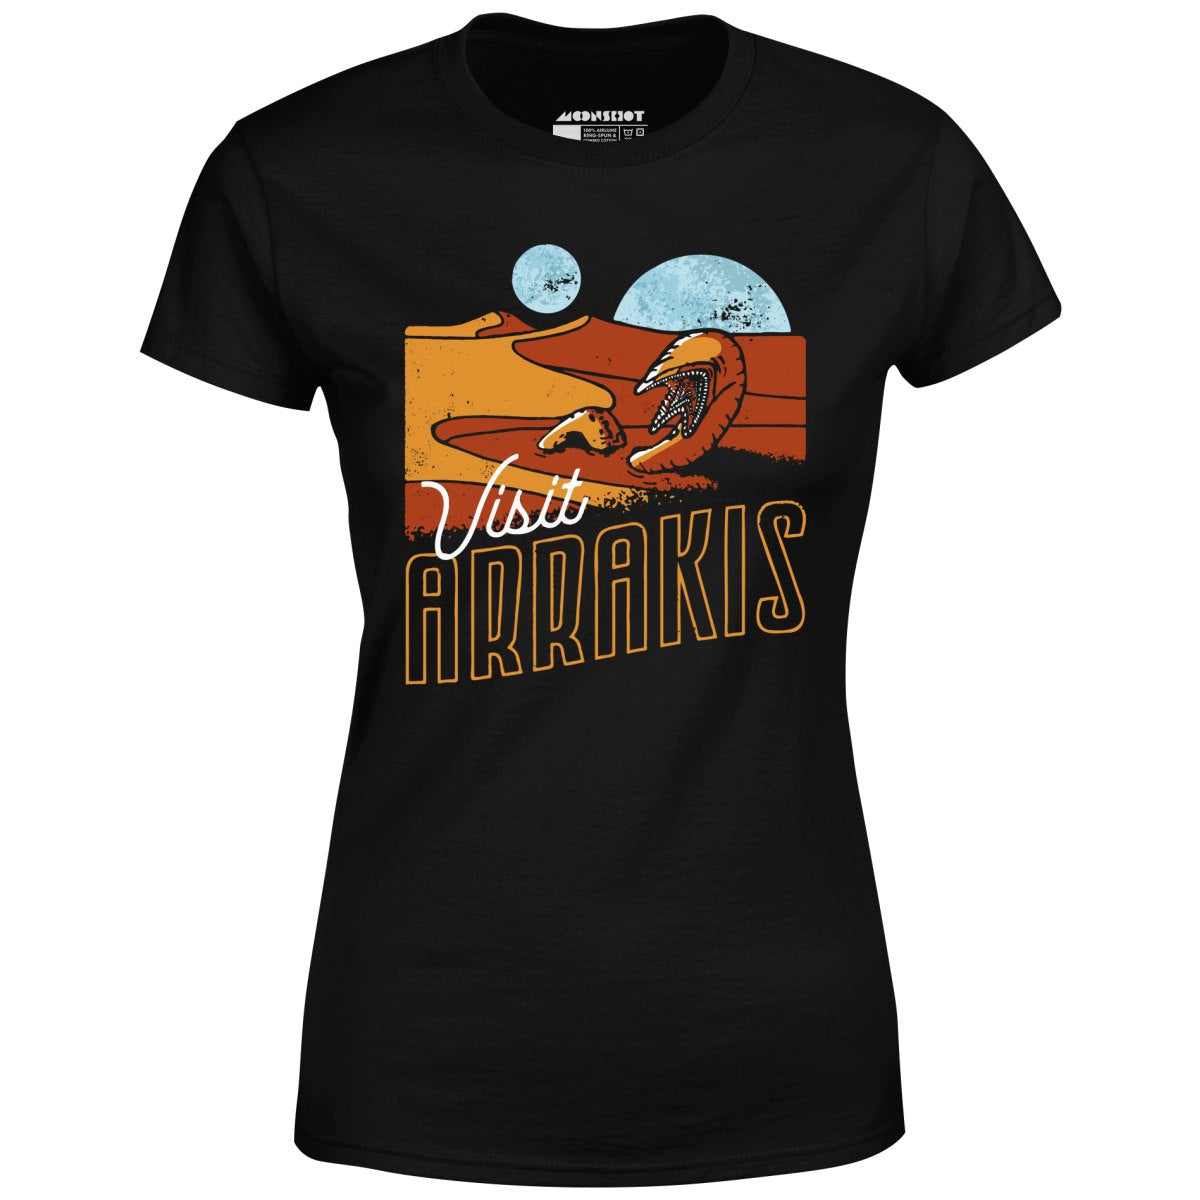 Visit Arrakis - Dune - Women's T-Shirt